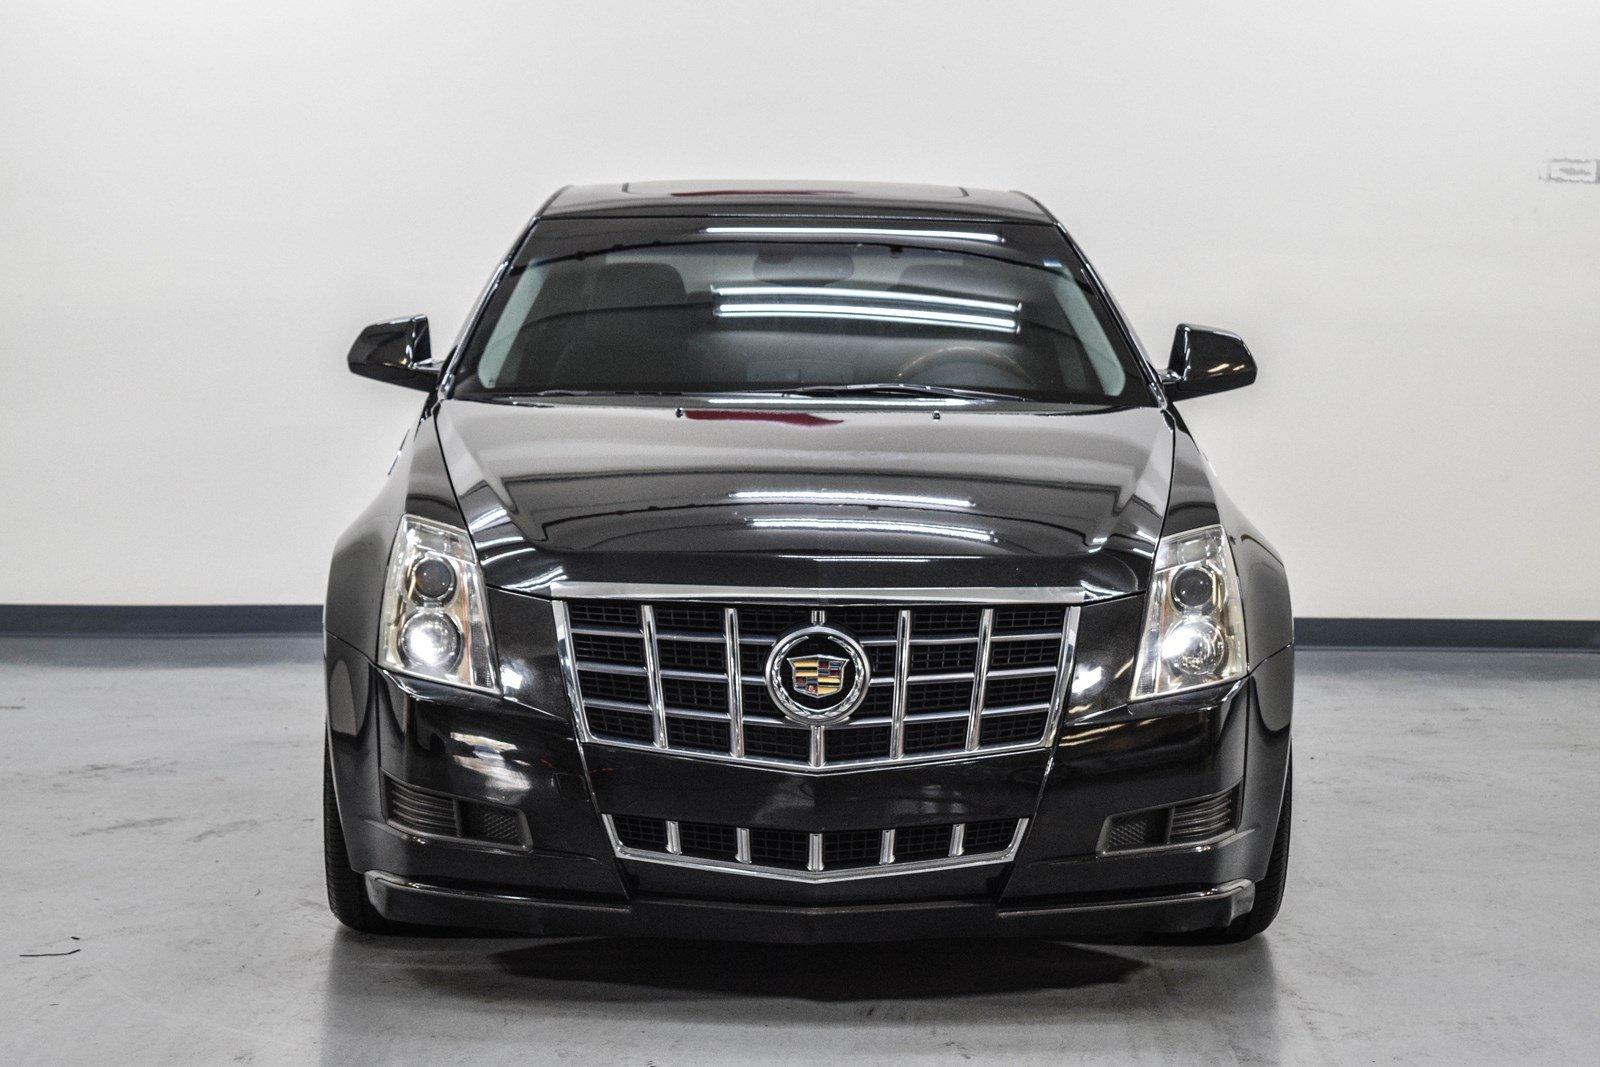 Used 2012 Cadillac CTS Sedan Luxury for sale Sold at Gravity Autos Marietta in Marietta GA 30060 3